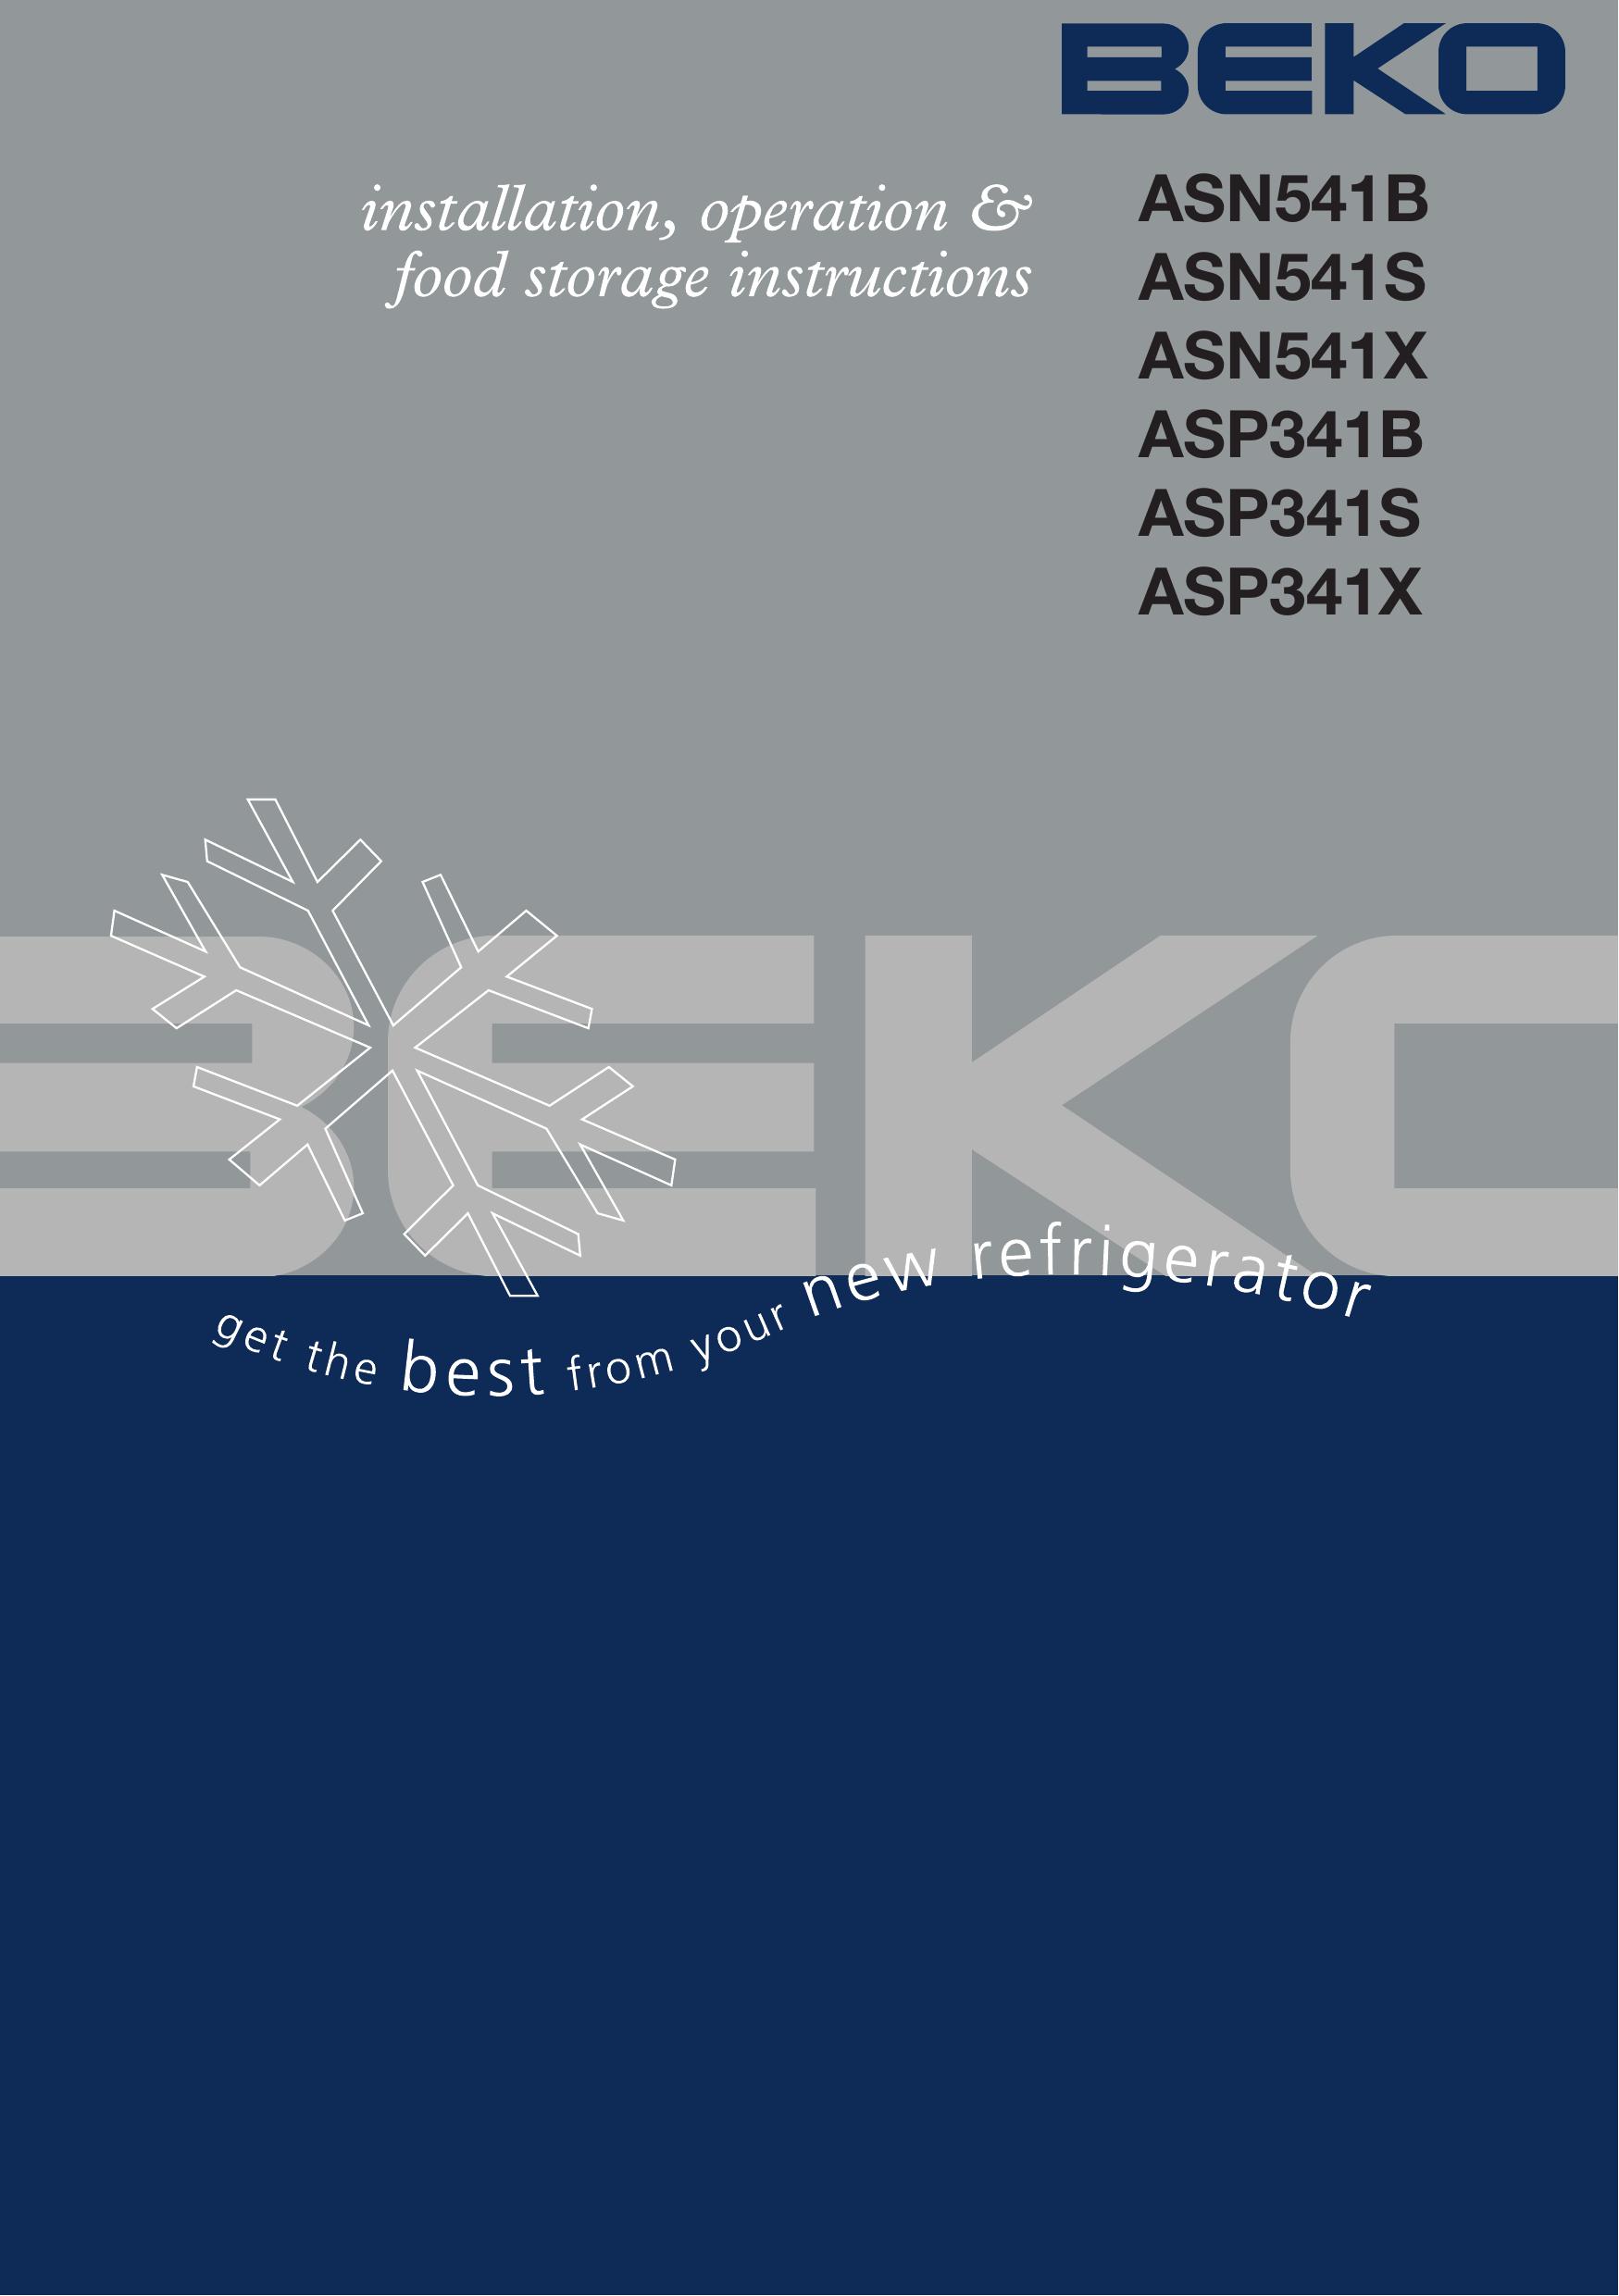 Beko ASP341B Refrigerator User Manual